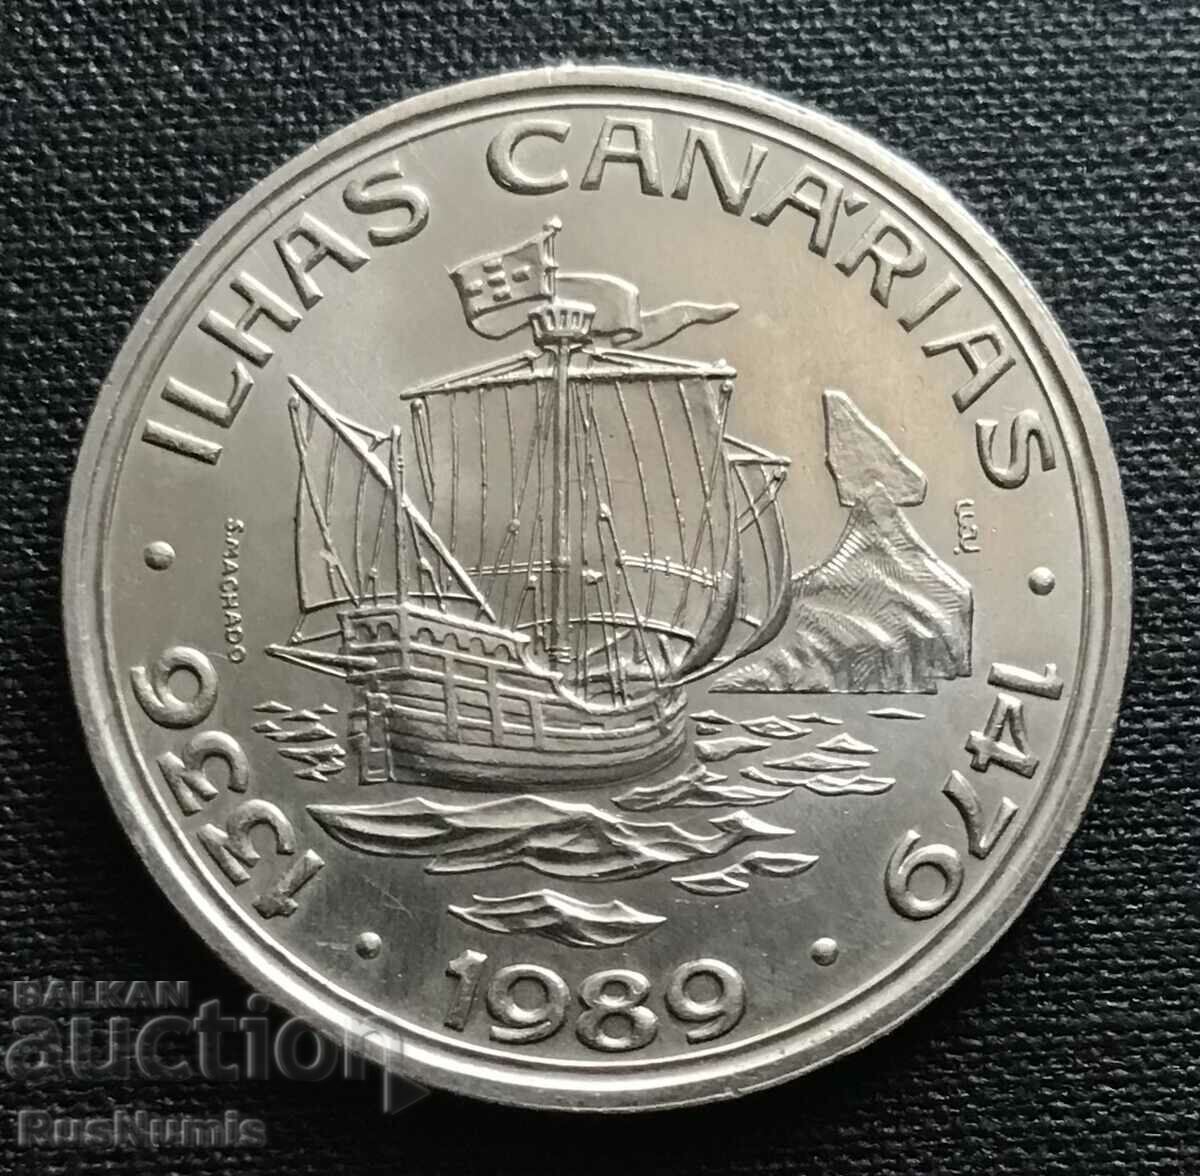 Portugal. 100 escudos 1989 Canary Islands. UNC.